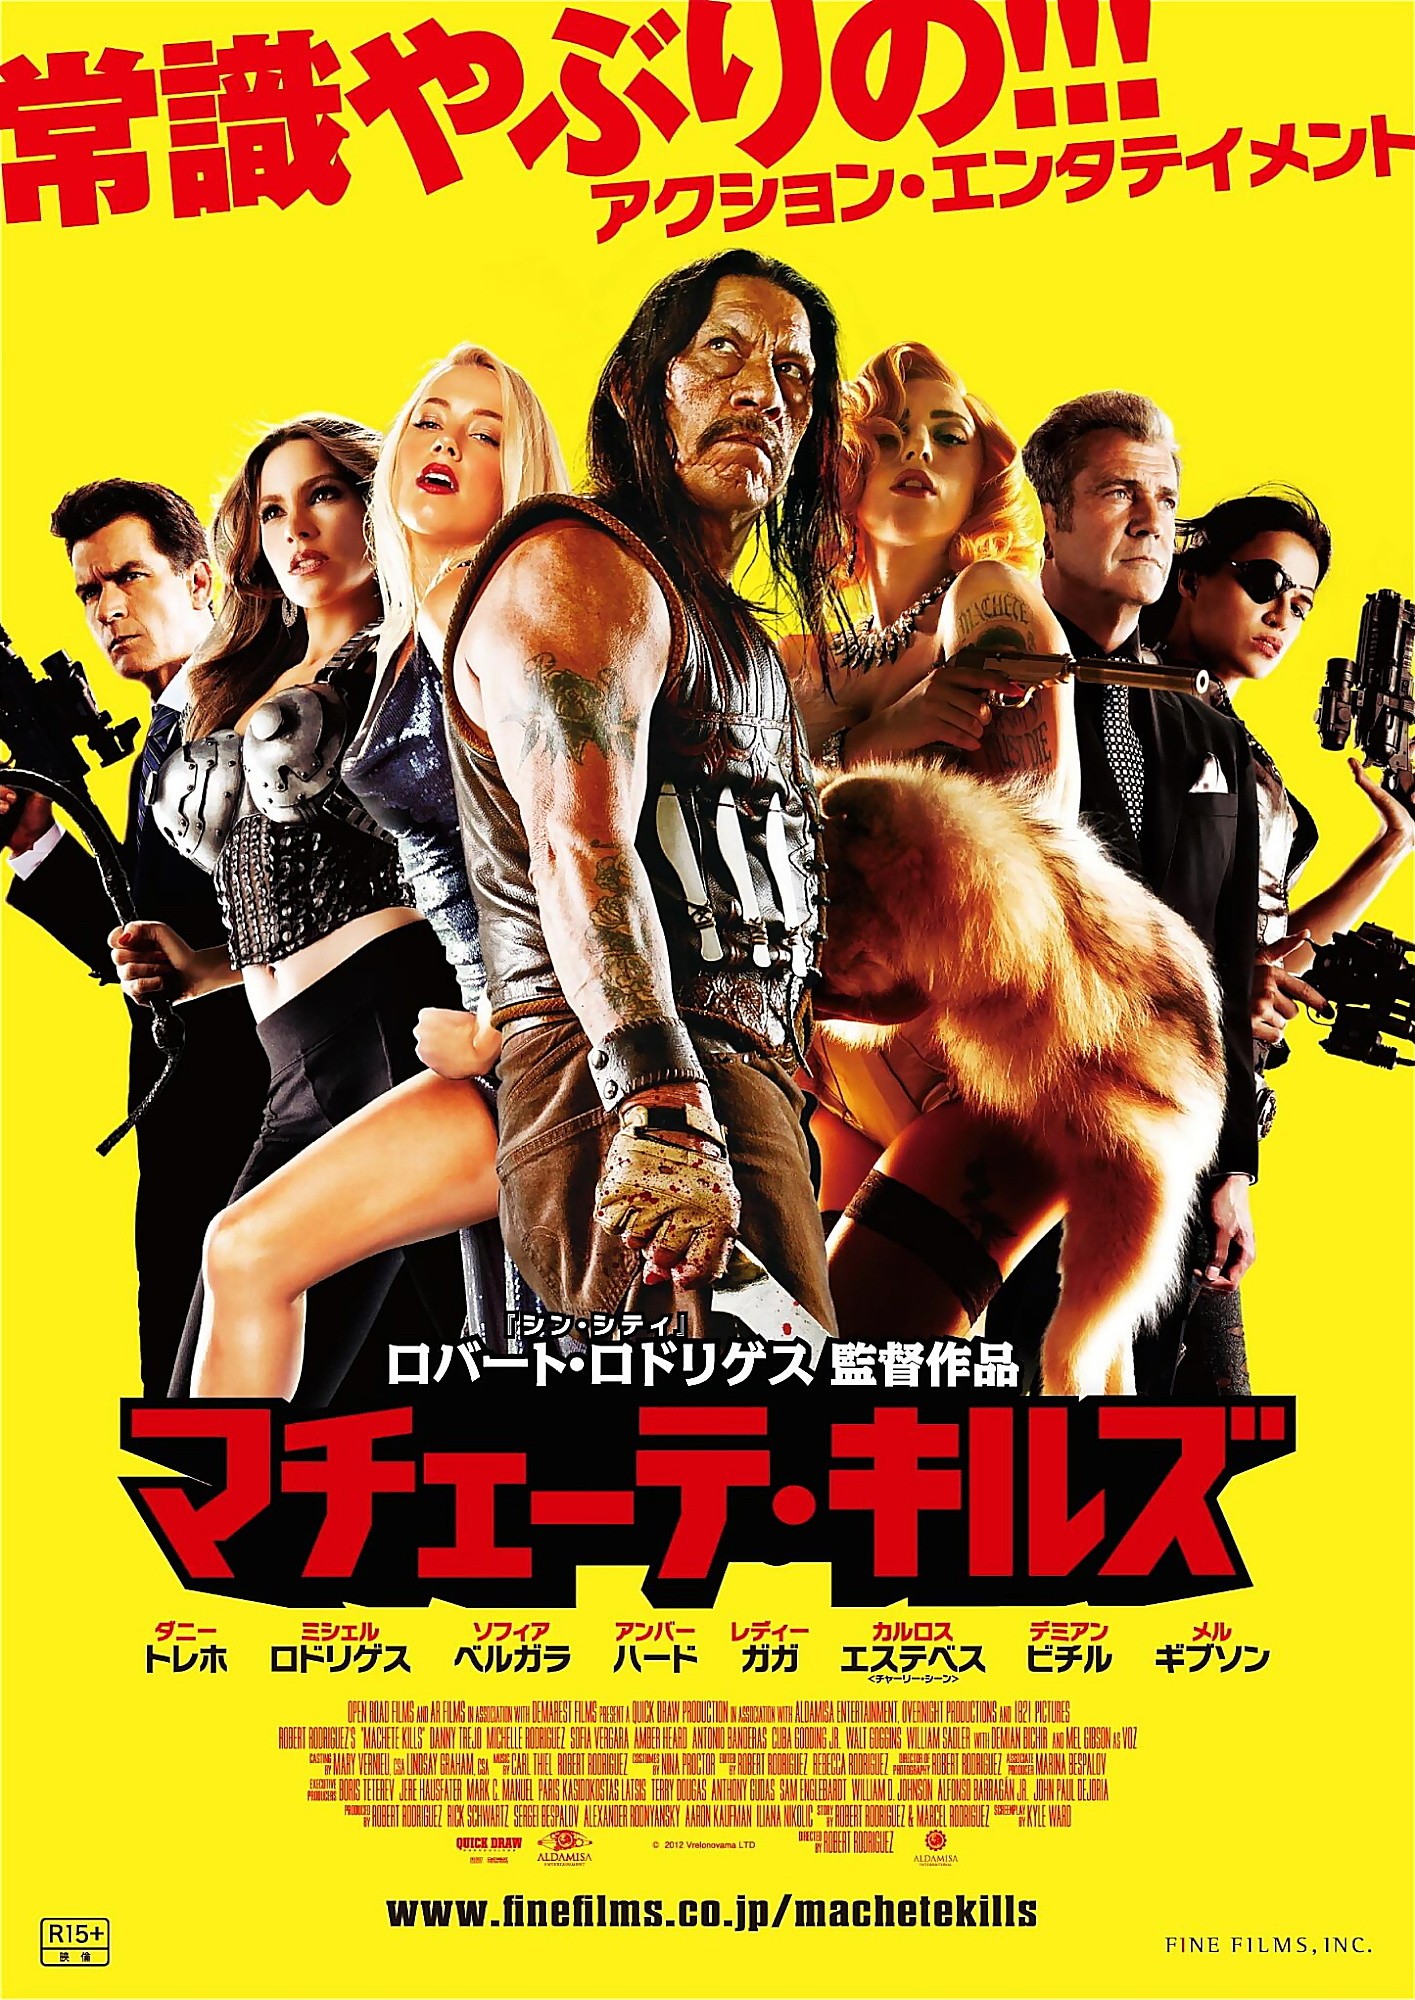 Mega Sized Movie Poster Image for Machete Kills (#27 of 27)